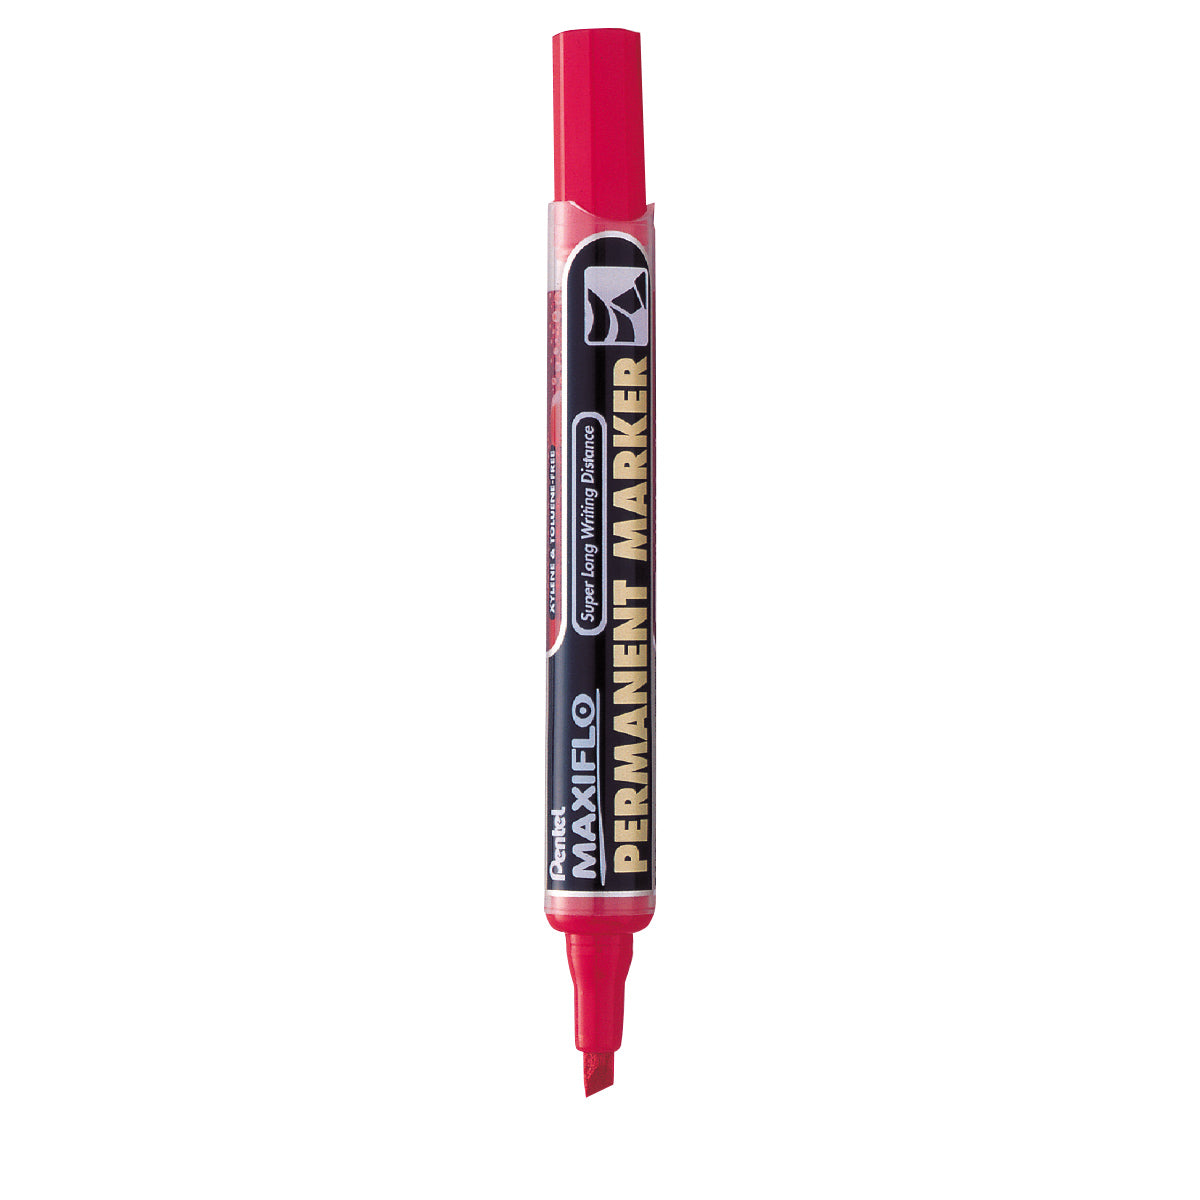 Pentel Maxiflo NLF60-B Permanent Marker - Red